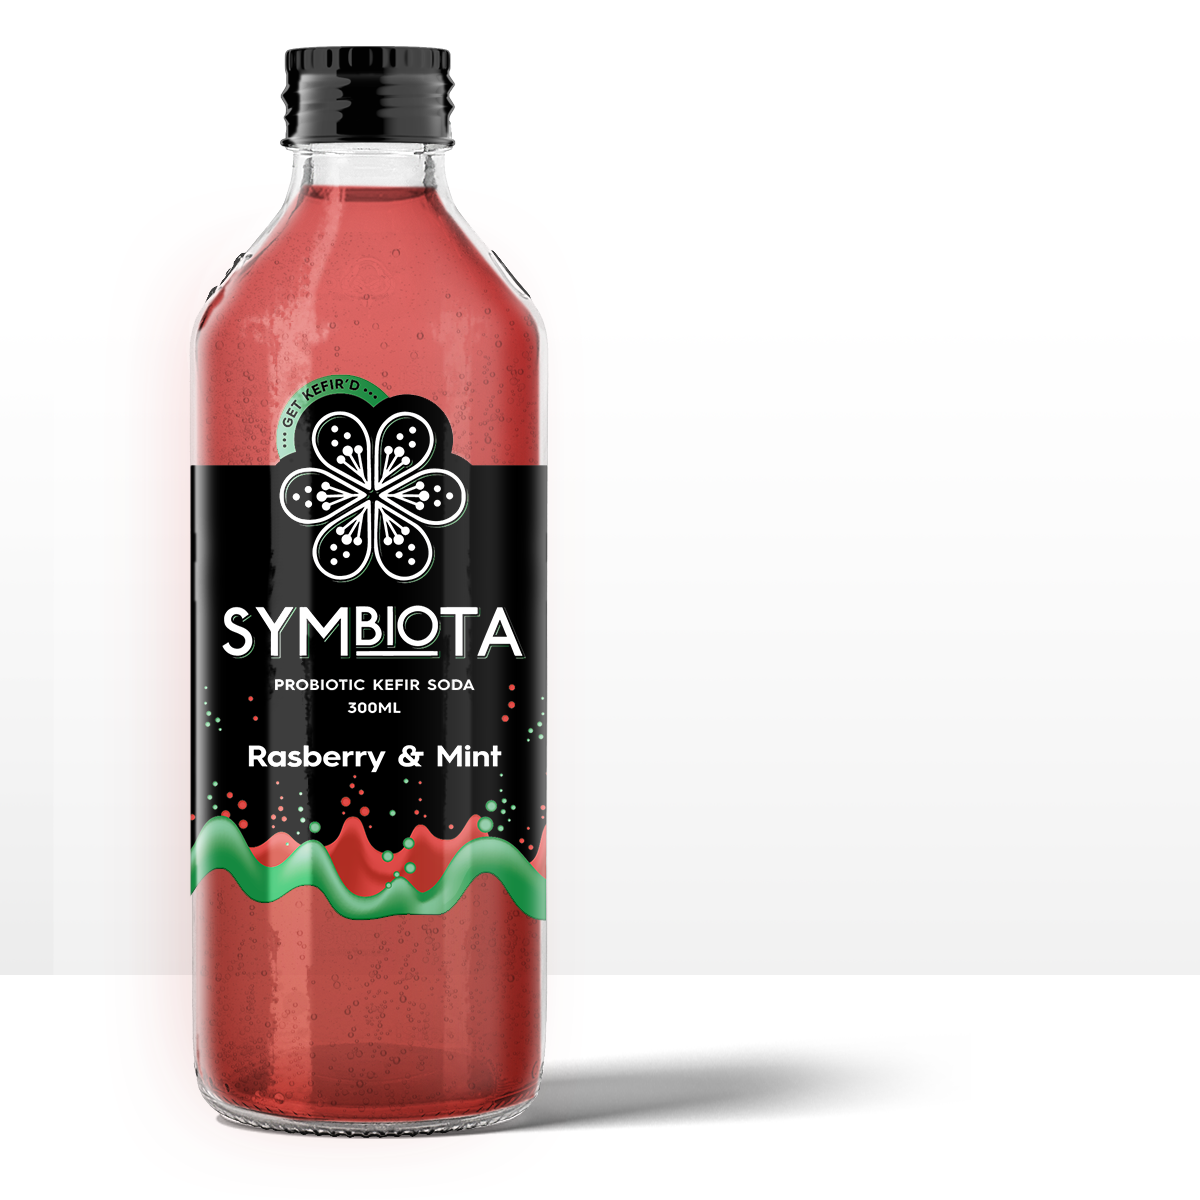 bottle of raspberry mint kefir probiotic soda by symbiota